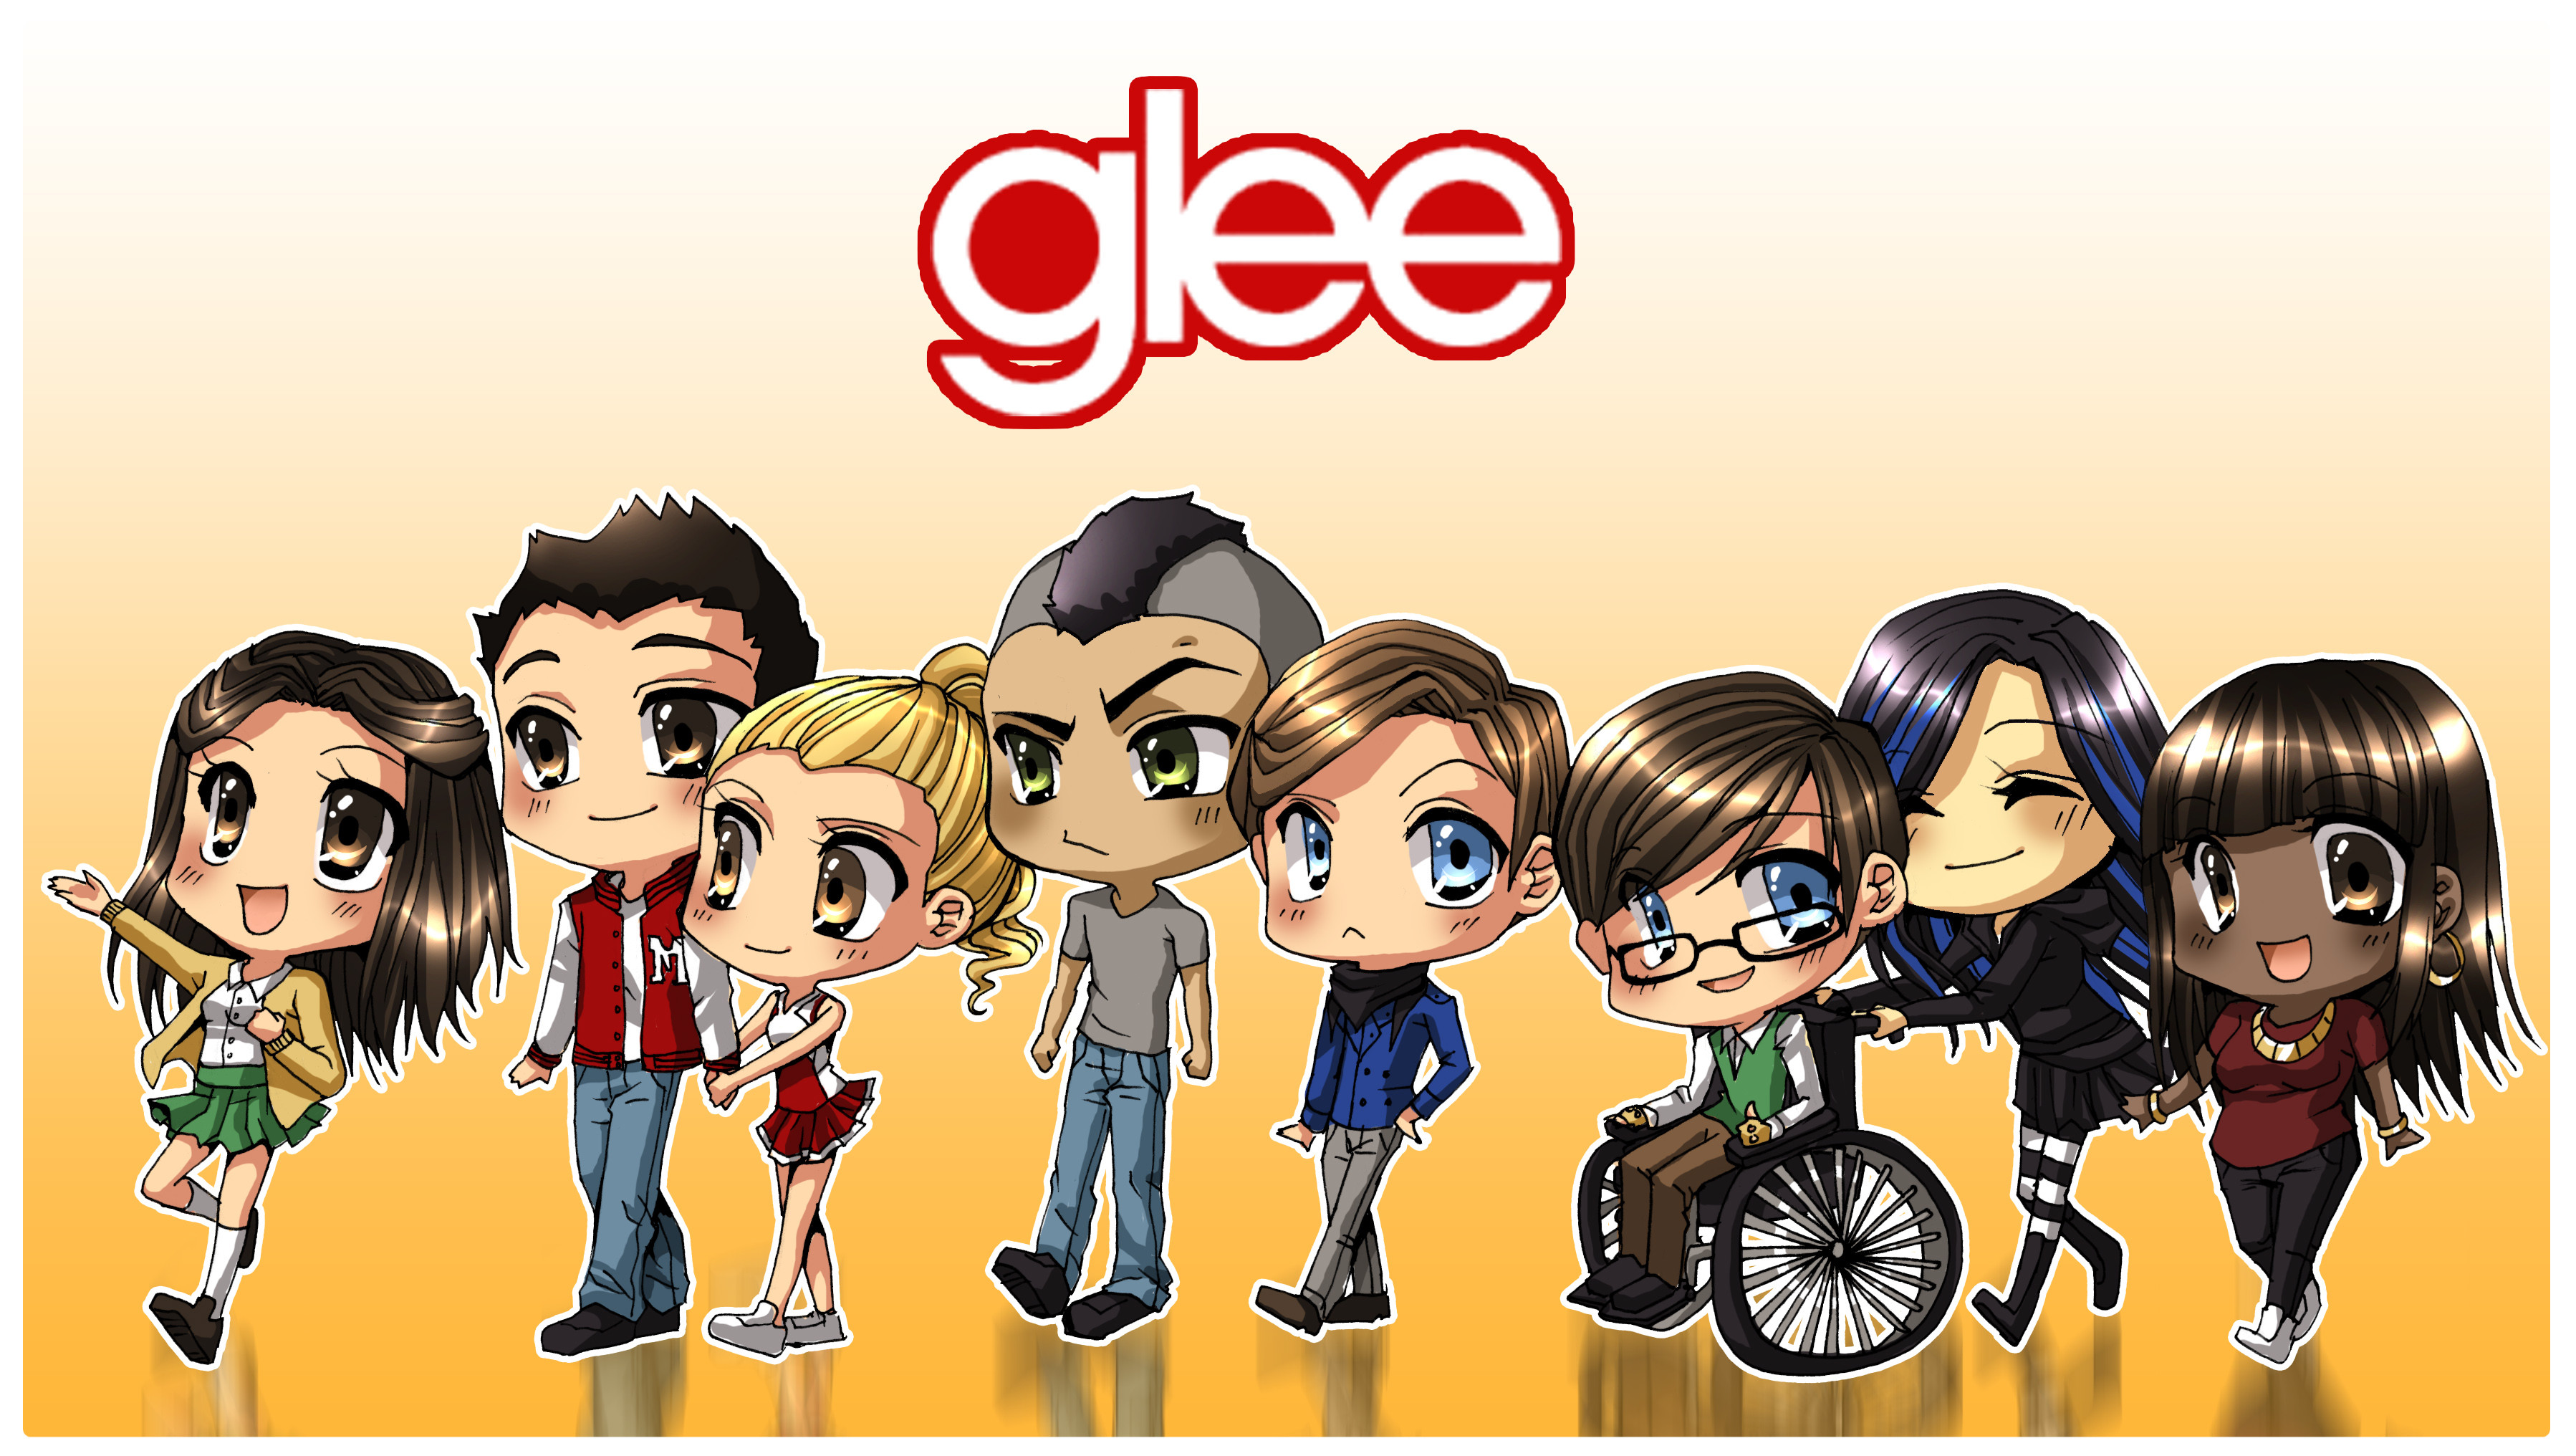 Glee Online Free